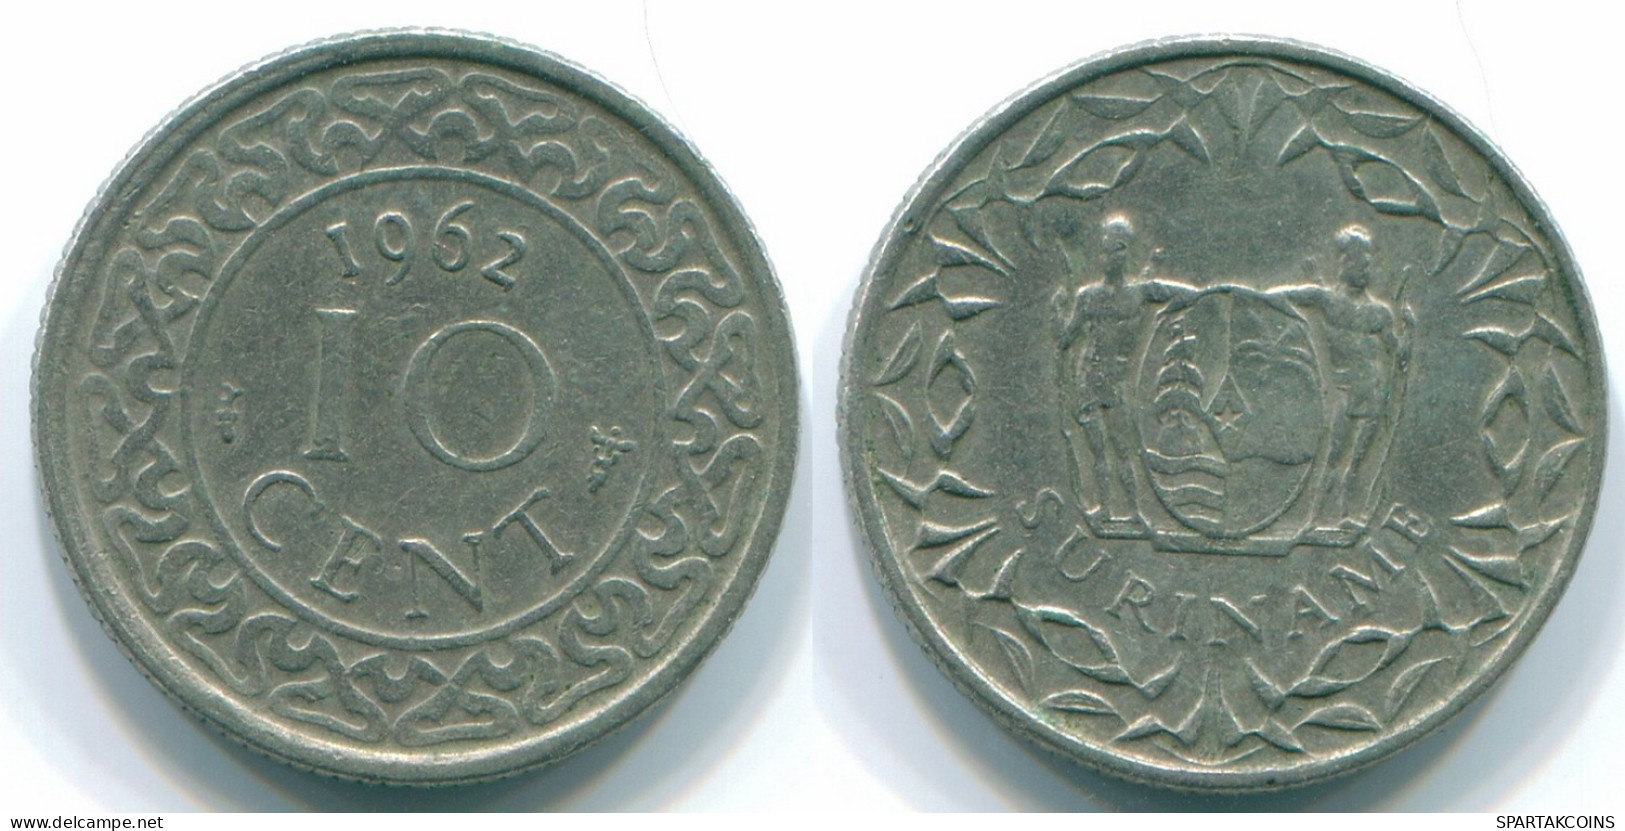 10 CENTS 1962 SURINAME Netherlands Nickel Colonial Coin #S13213.U.A - Surinam 1975 - ...